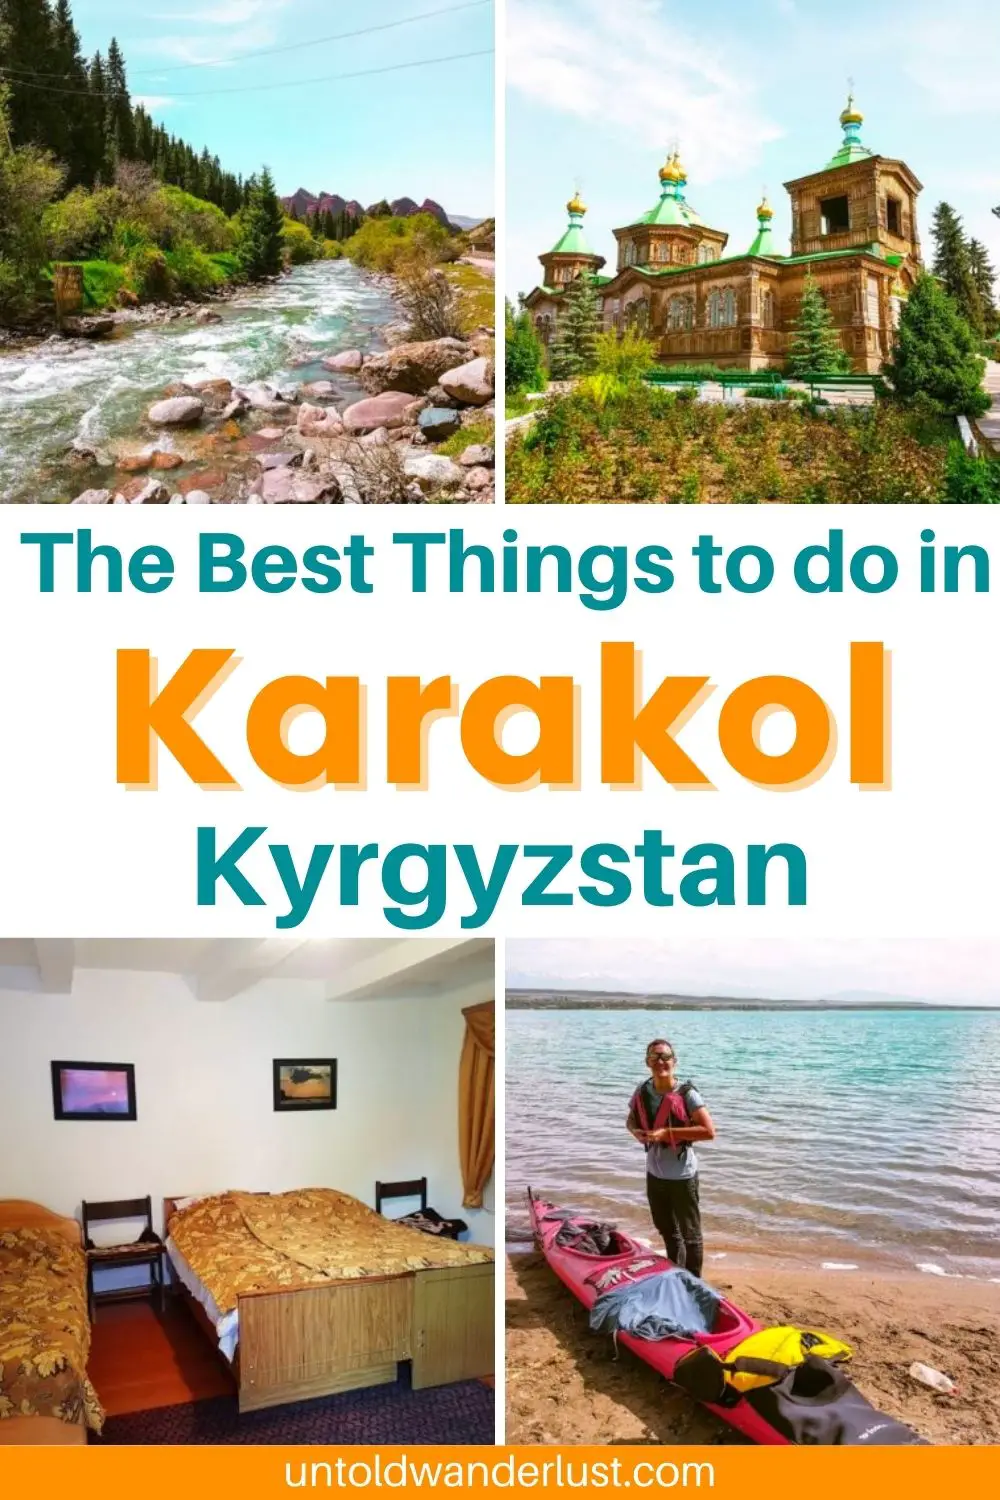 The Best Things to do in Krakol, Kyrgyzstan